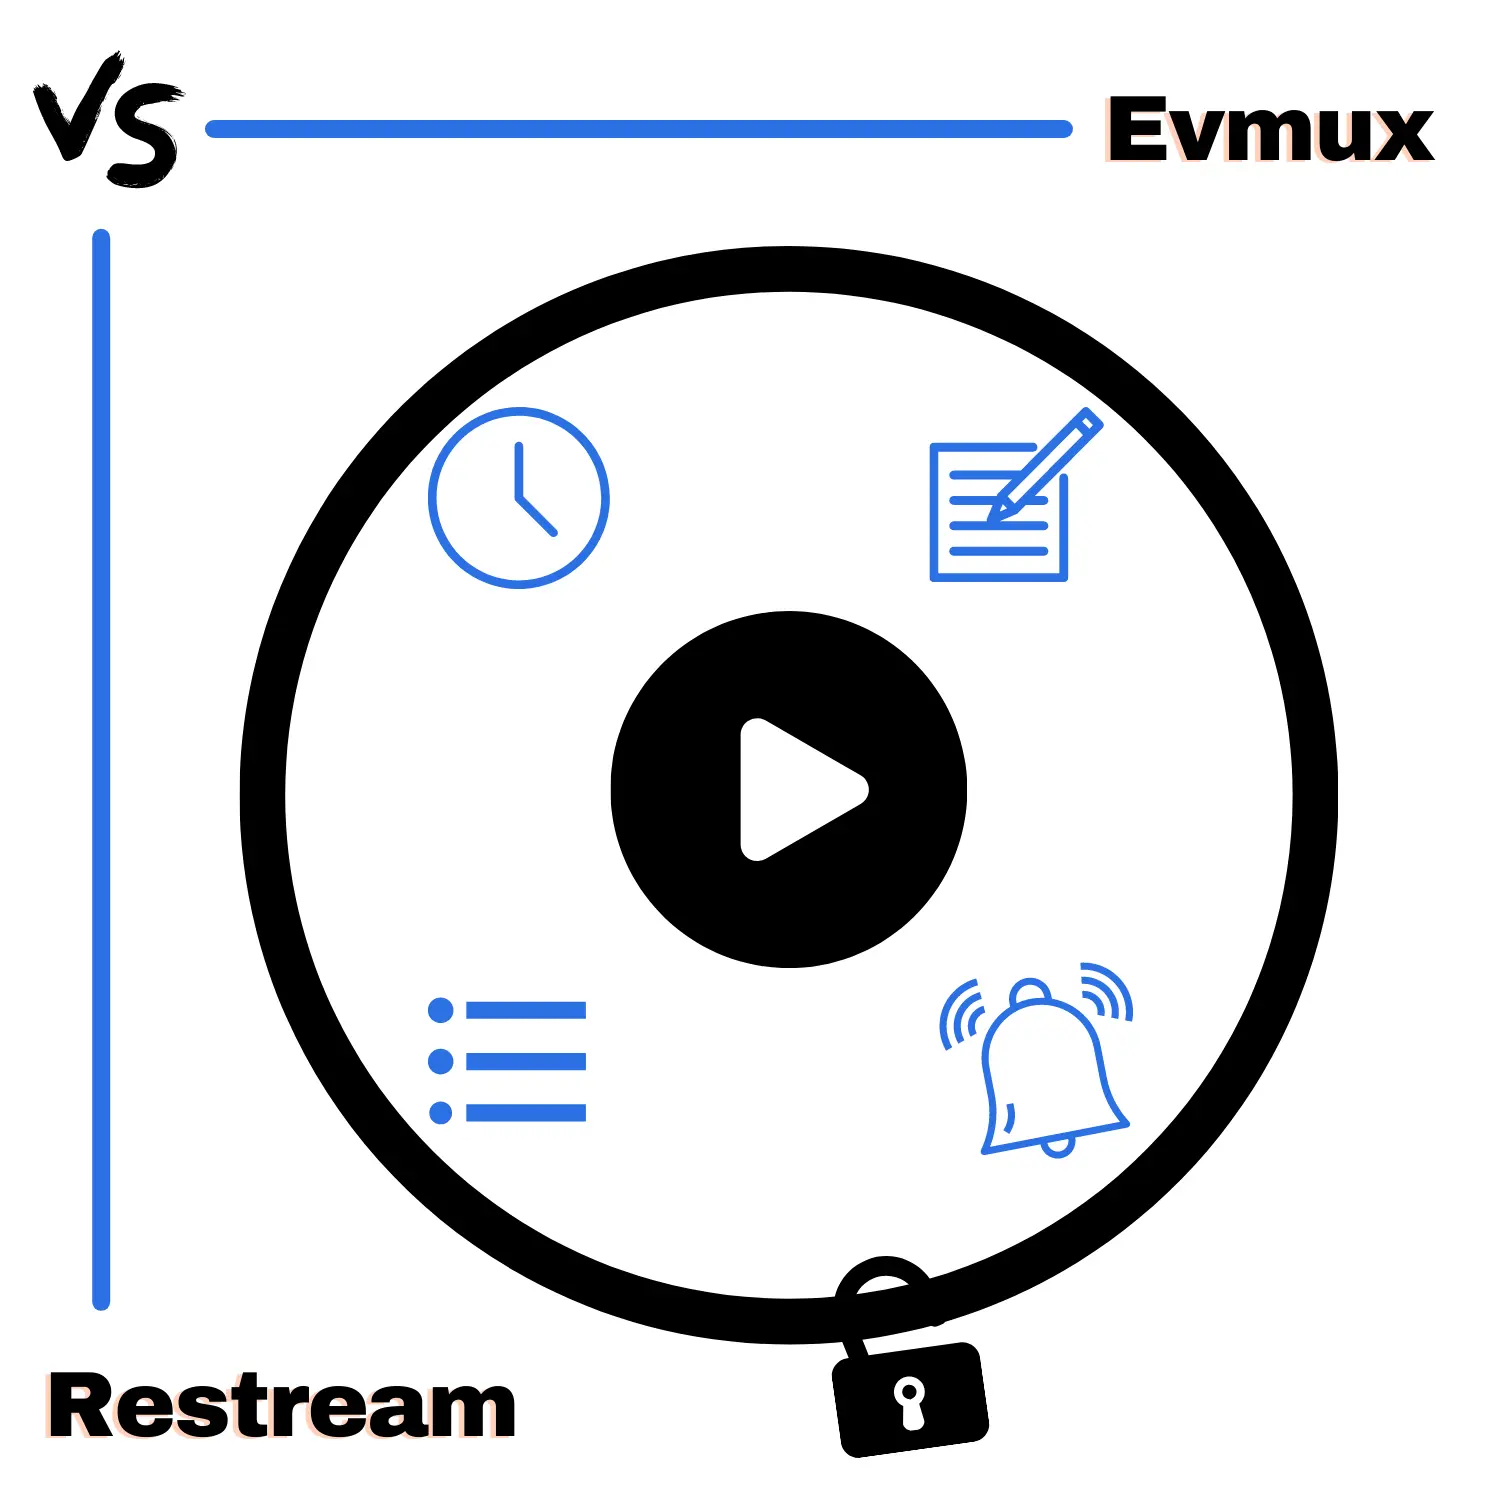 Evmux vs. Restream